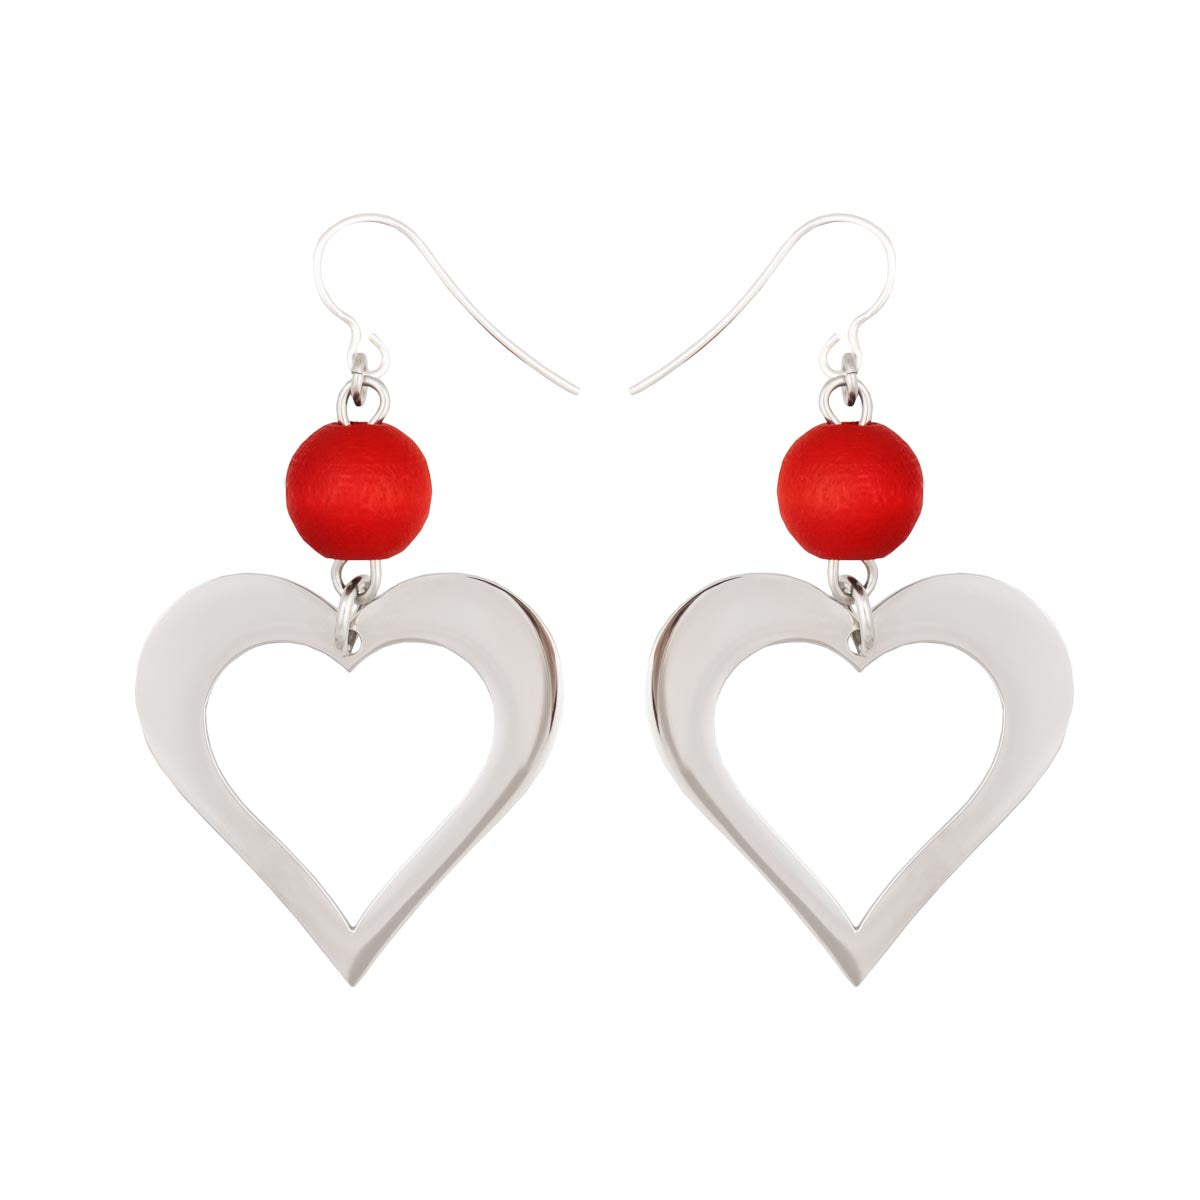 Valentine earrings, red